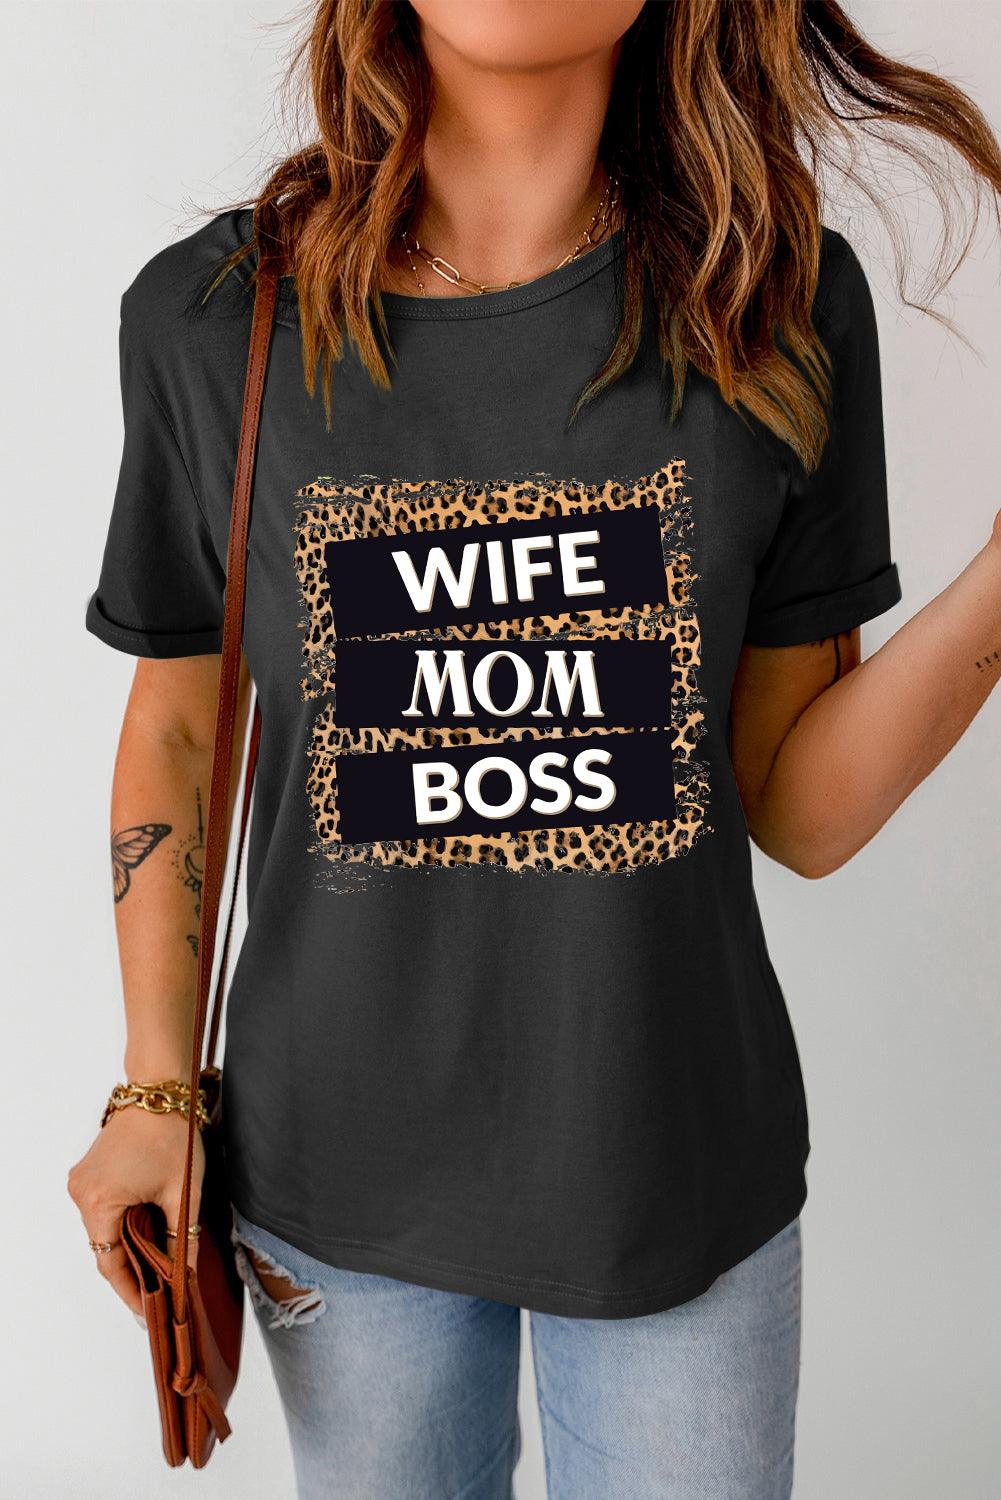 WIFE MOM BOSS Leopard Graphic Tee - BELLATRENDZ